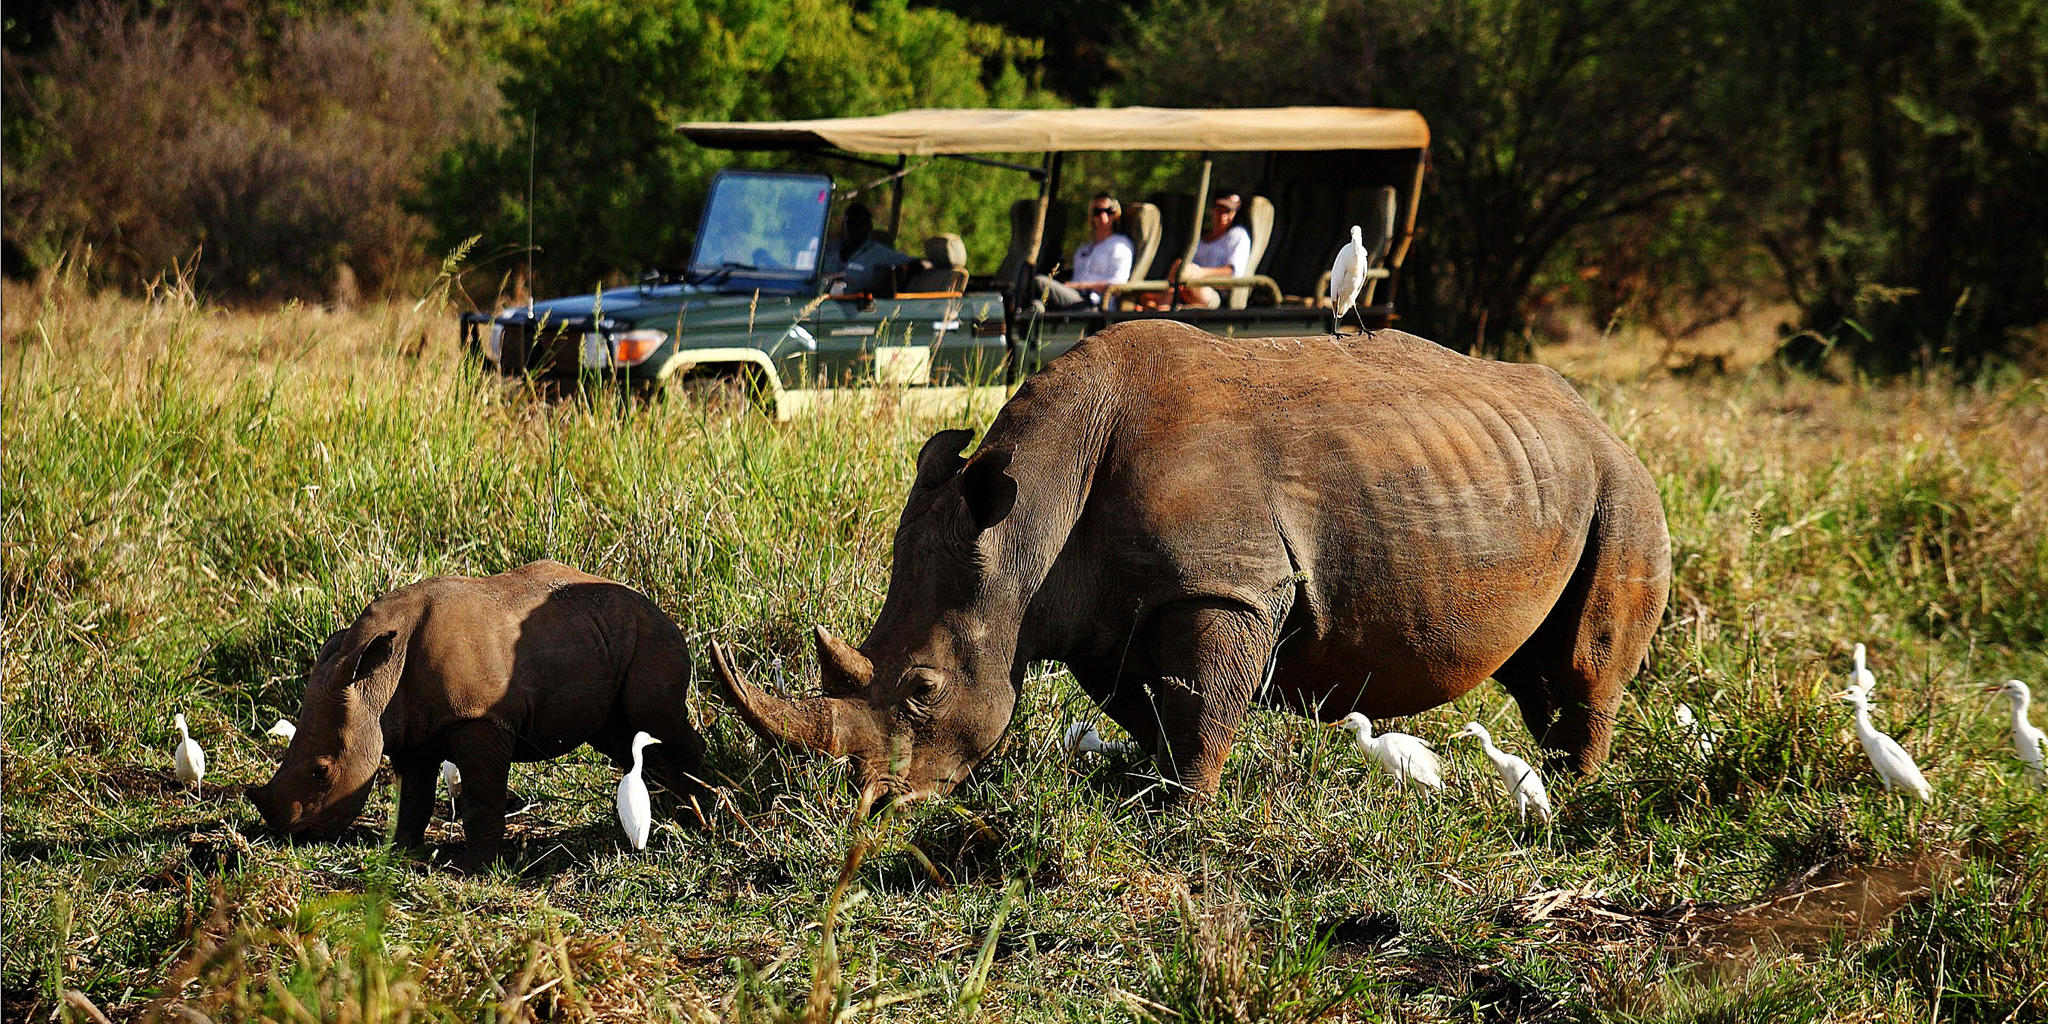 Rhino game drive, Meru National Park safaris, Kenya